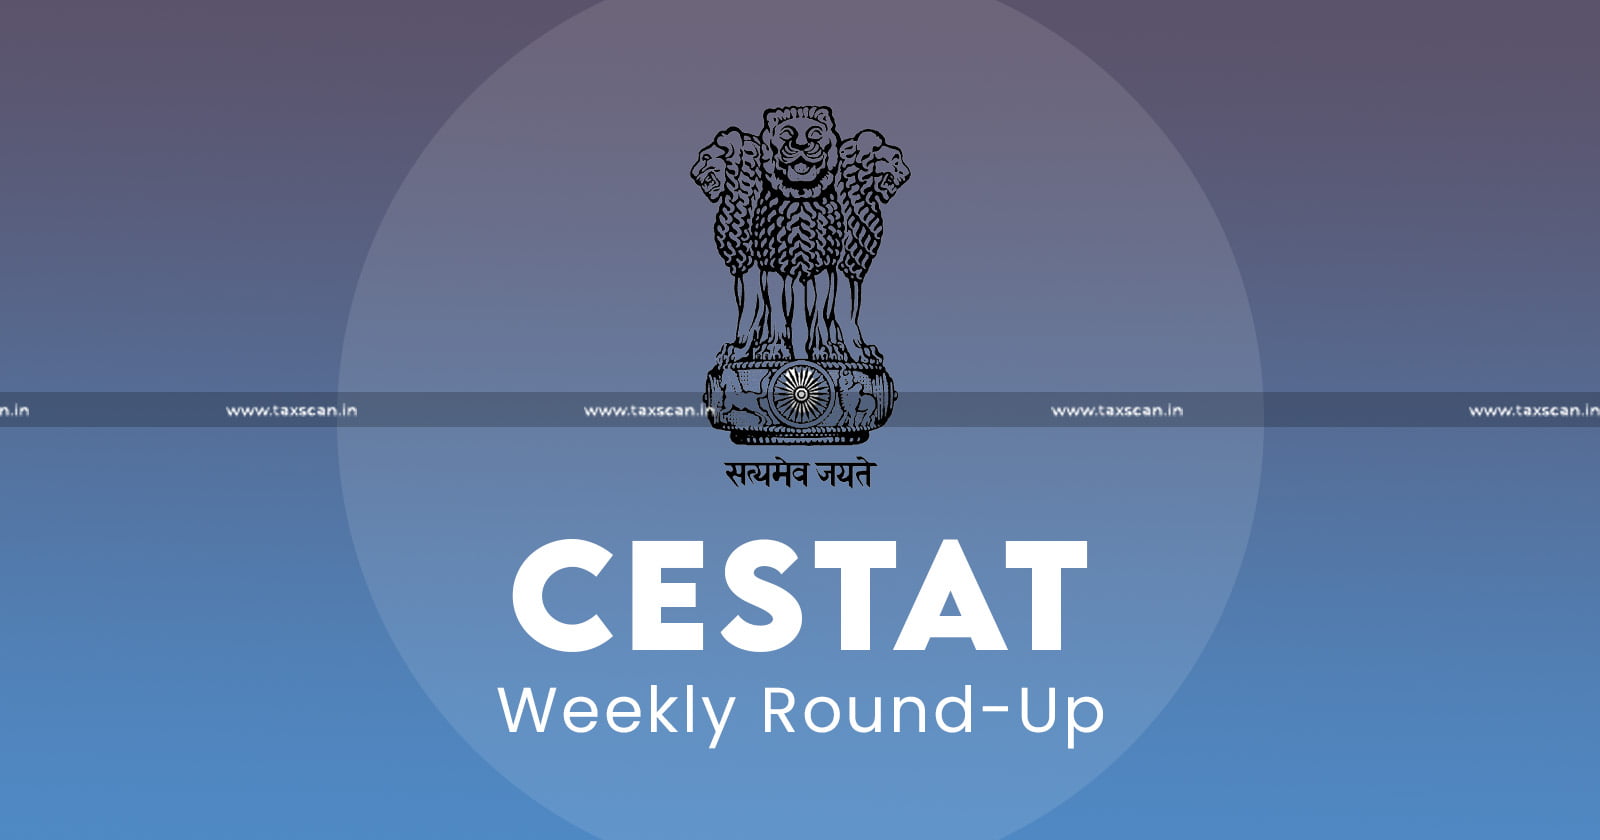 CESTAT-Weekly-Round-Up-Weekly-Round-Up-CESTAT-Round-Up-TAXSCAN